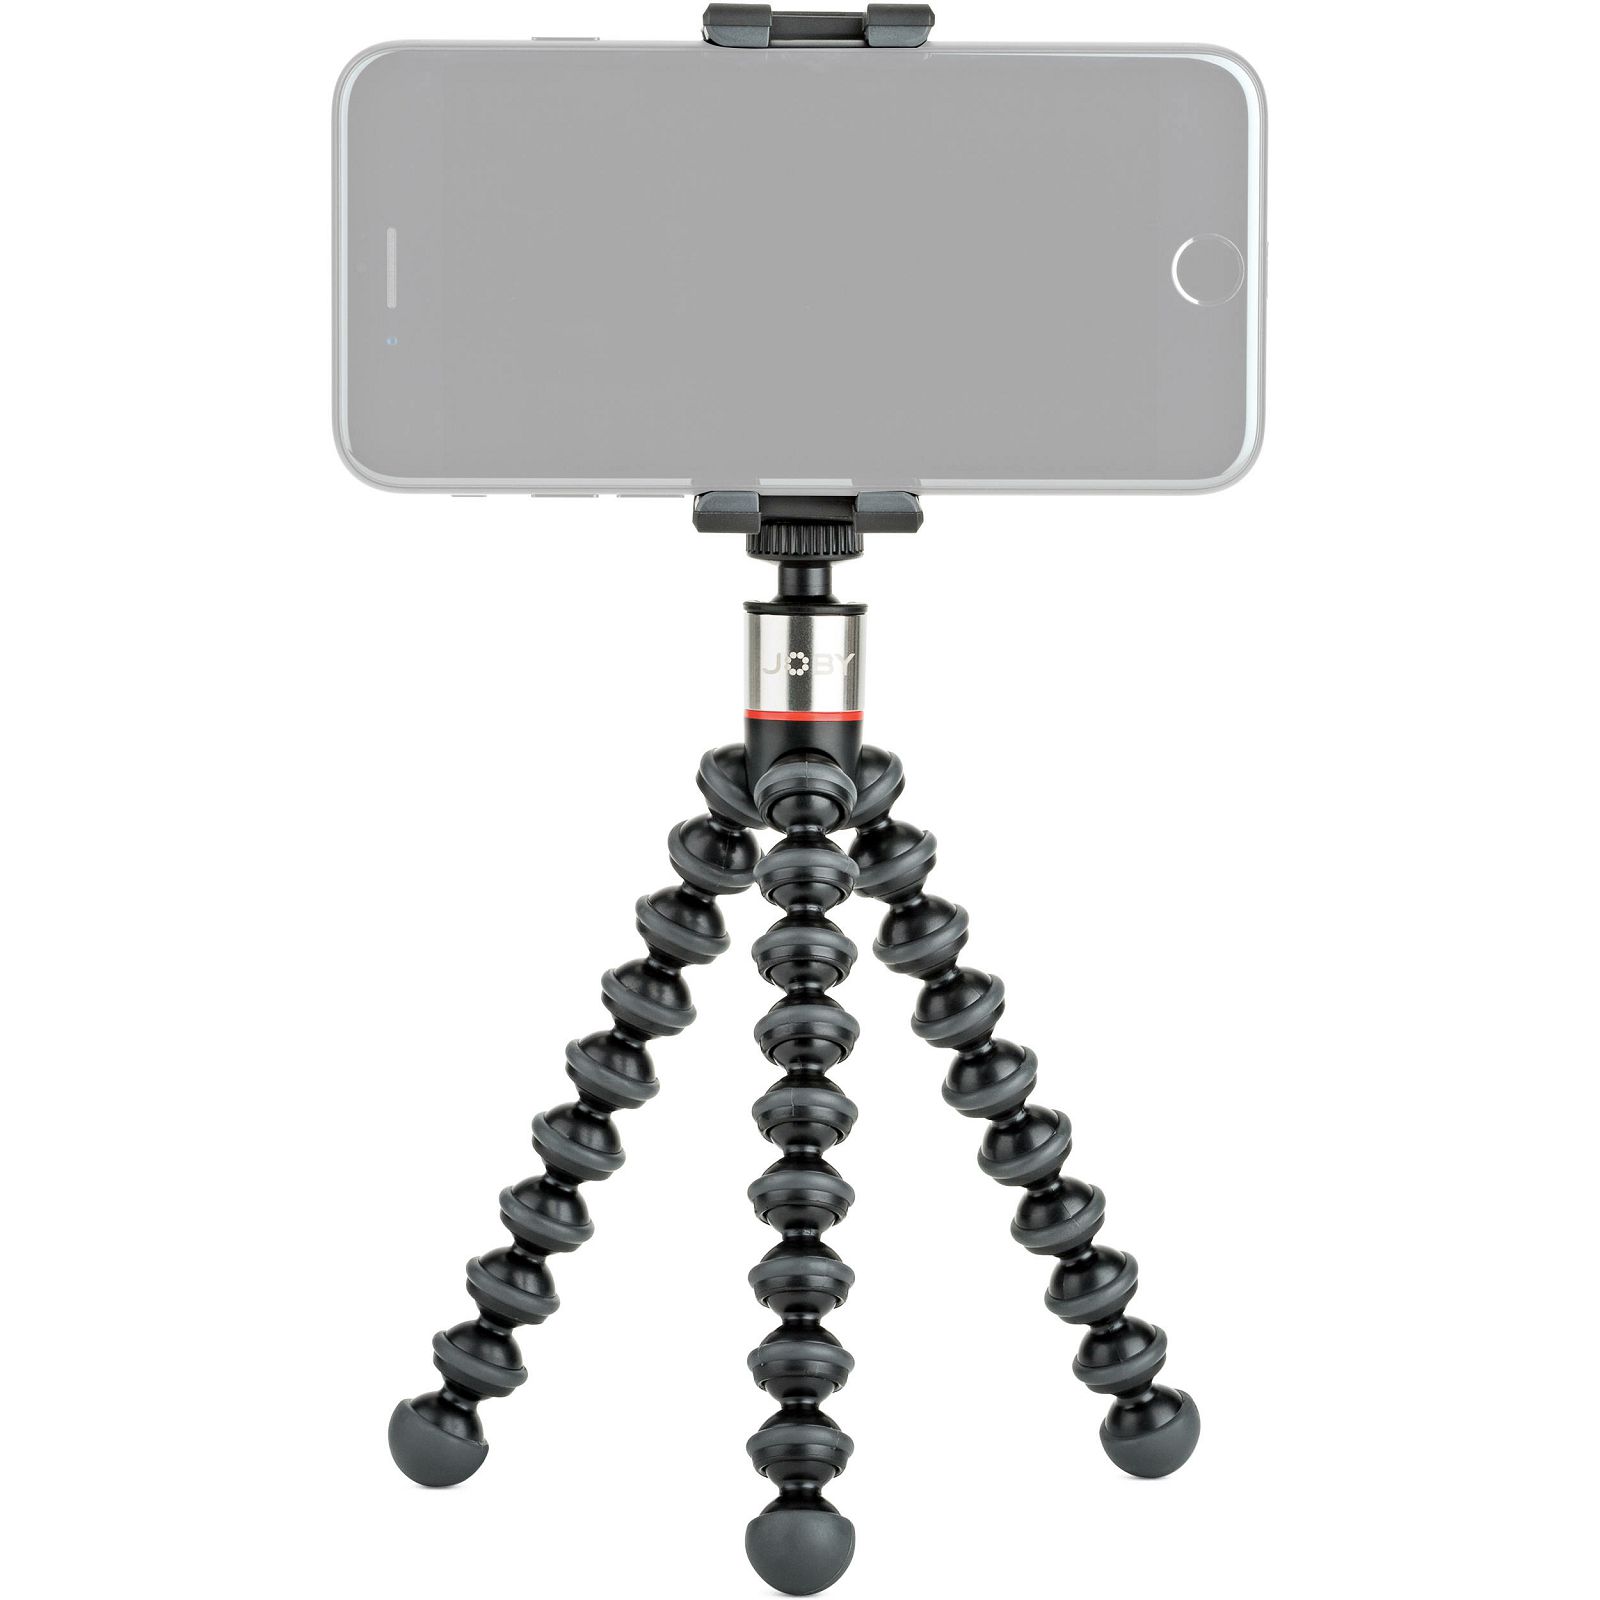 Joby GripTight ONE GorillaPod Stand fleksibilni zglobni mini stativ za smartphone (JB01491)